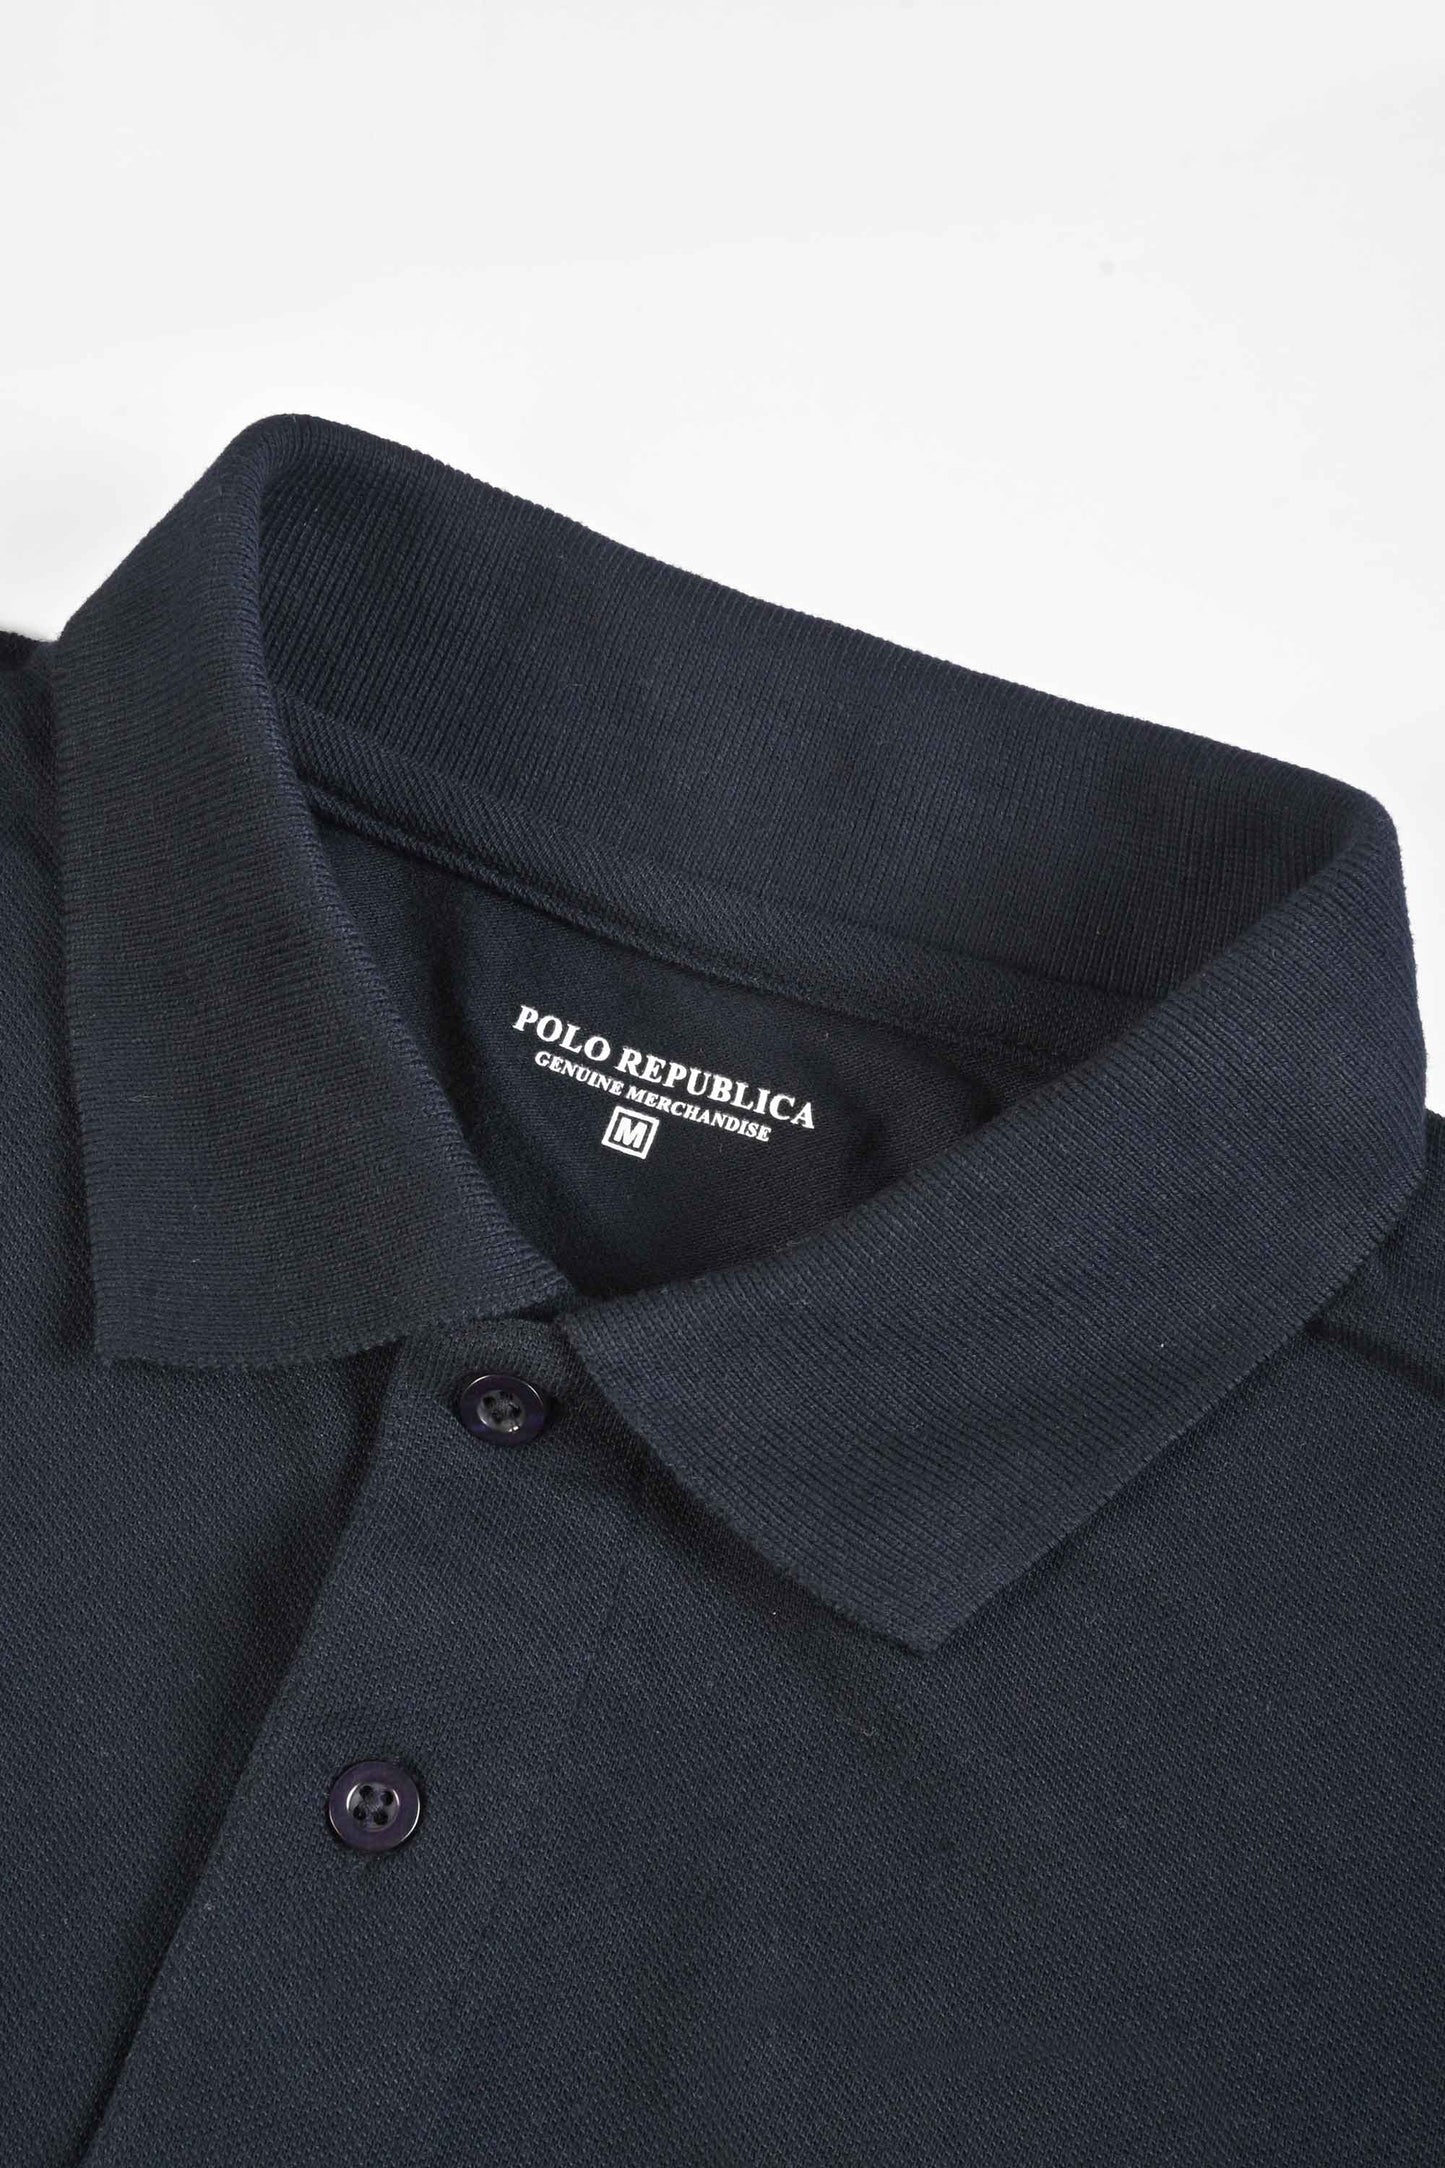 Polo Republica Men's Vintage Embroidered Short Sleeve Polo Shirt